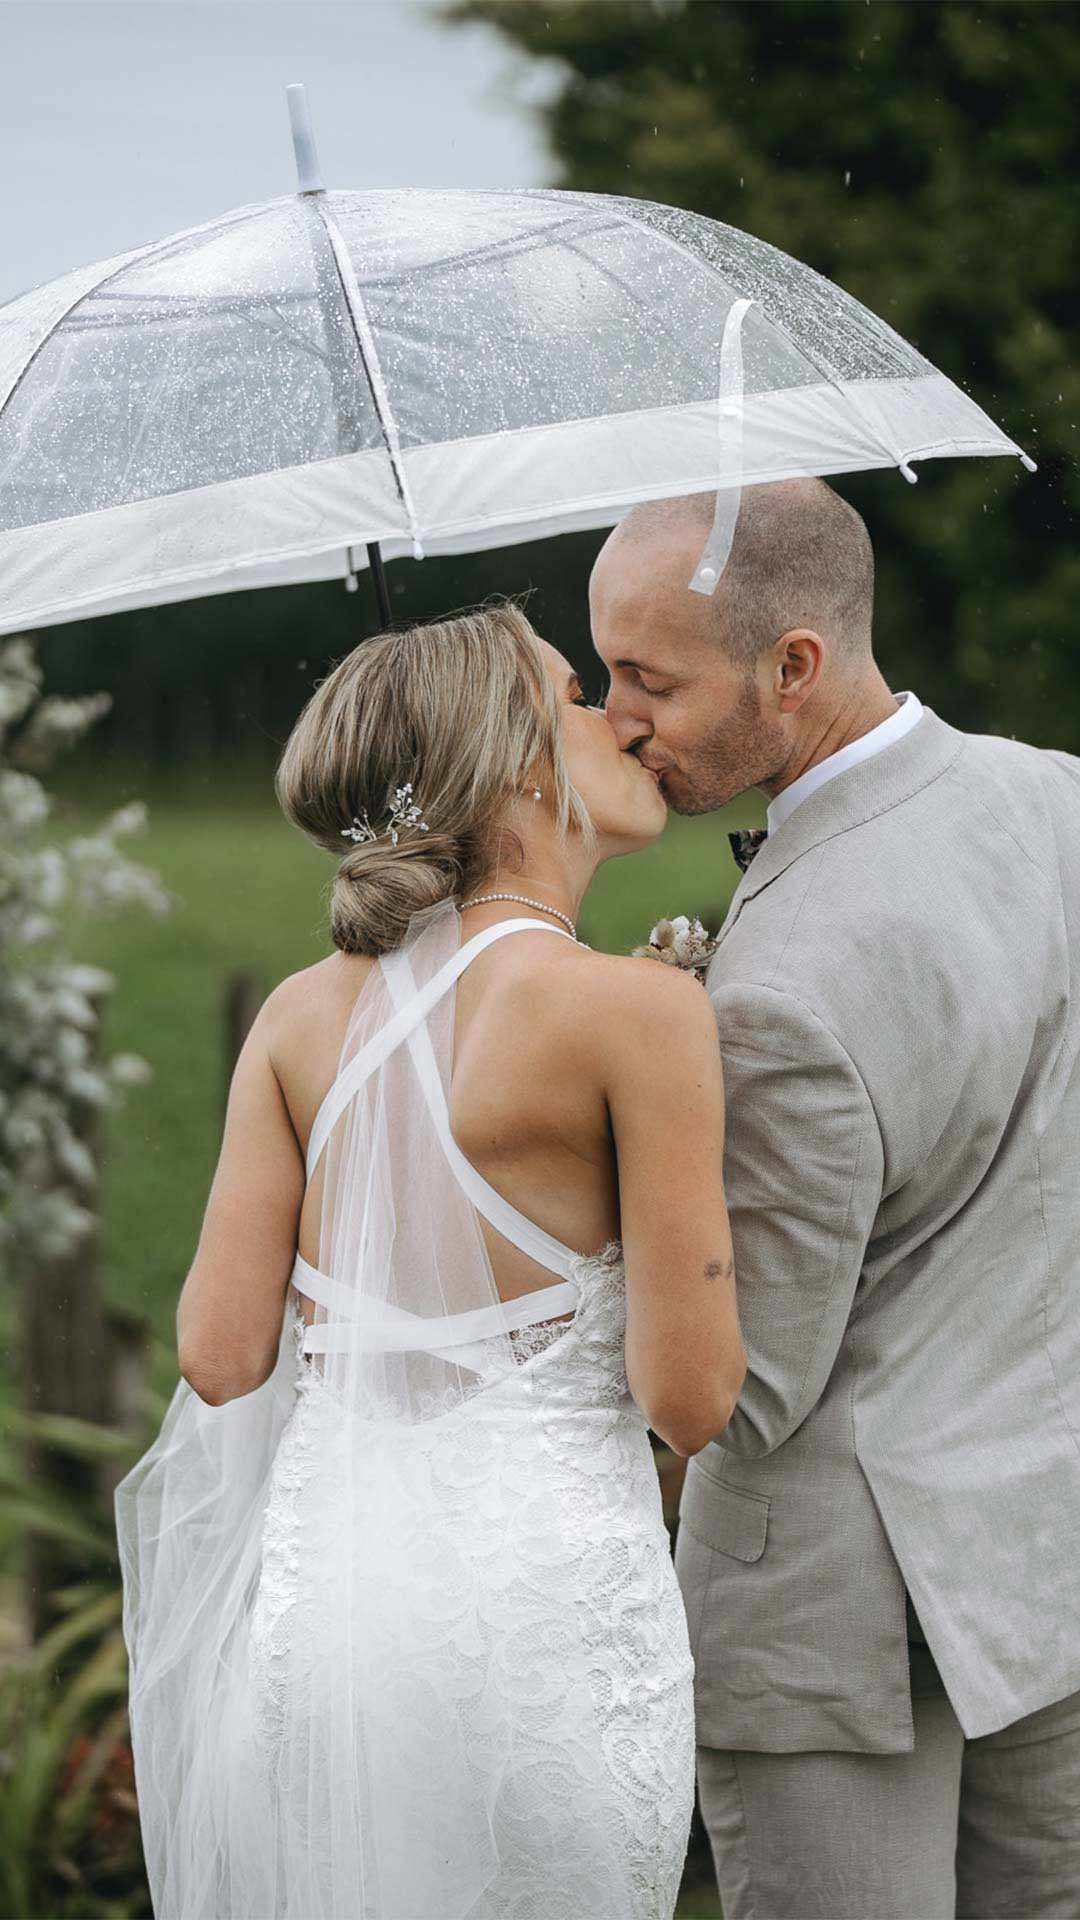 Wedding photography video